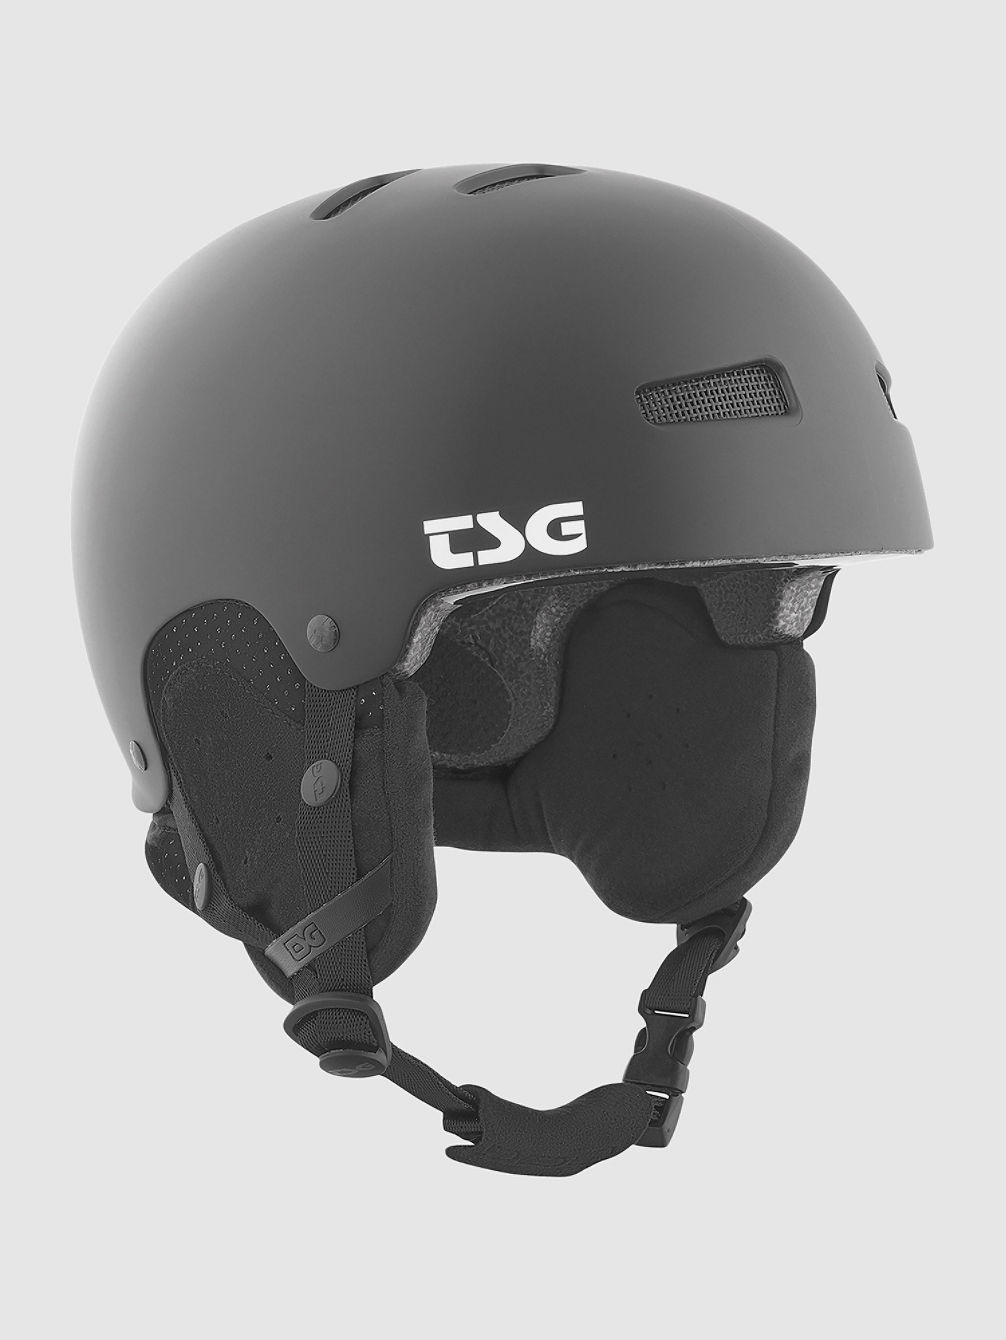 Gravity Snowboard Helm